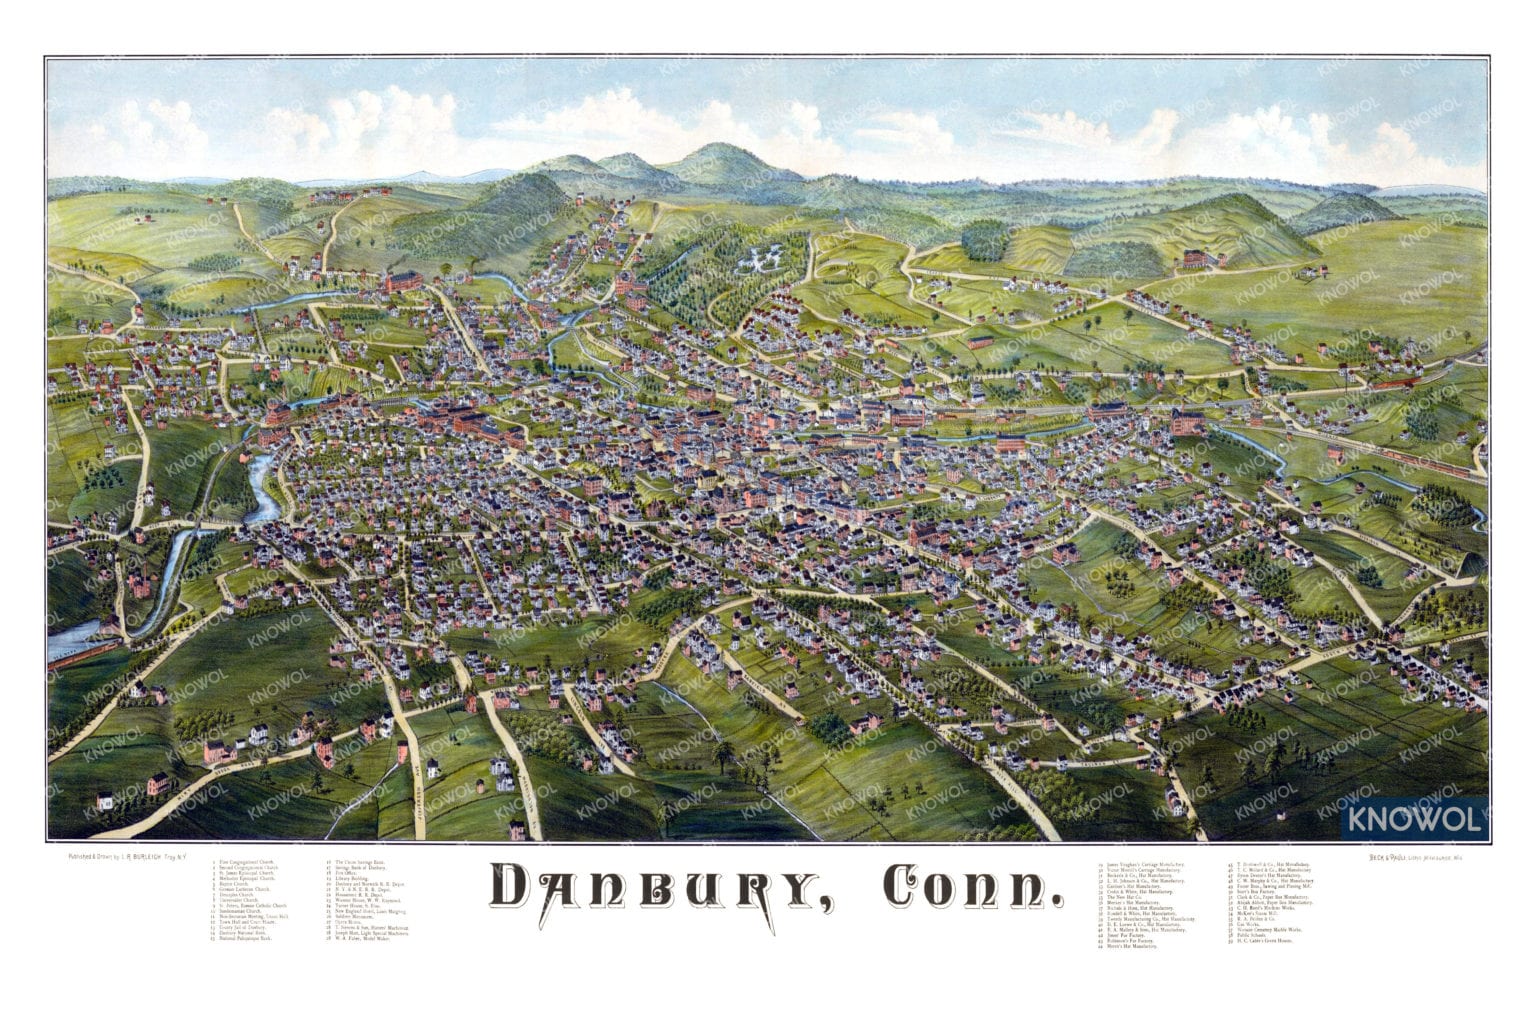 Danbury Ct 1884 SM 1536x1024 